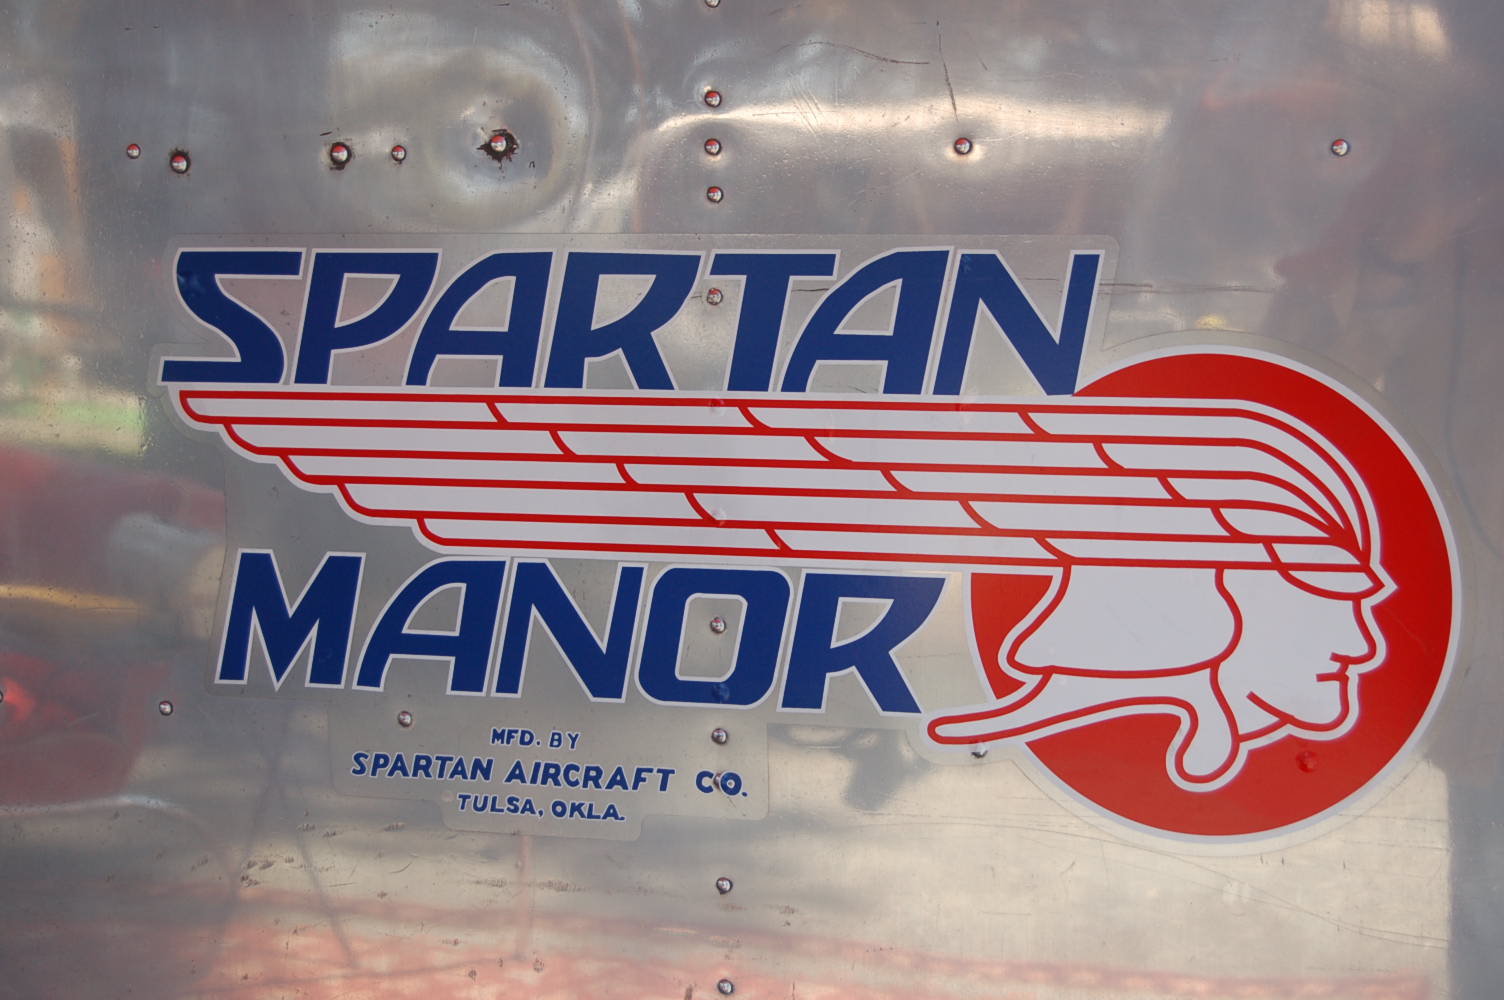 Spartan Manor PAIR large trailer RV sticker decal 12"x5.3" 